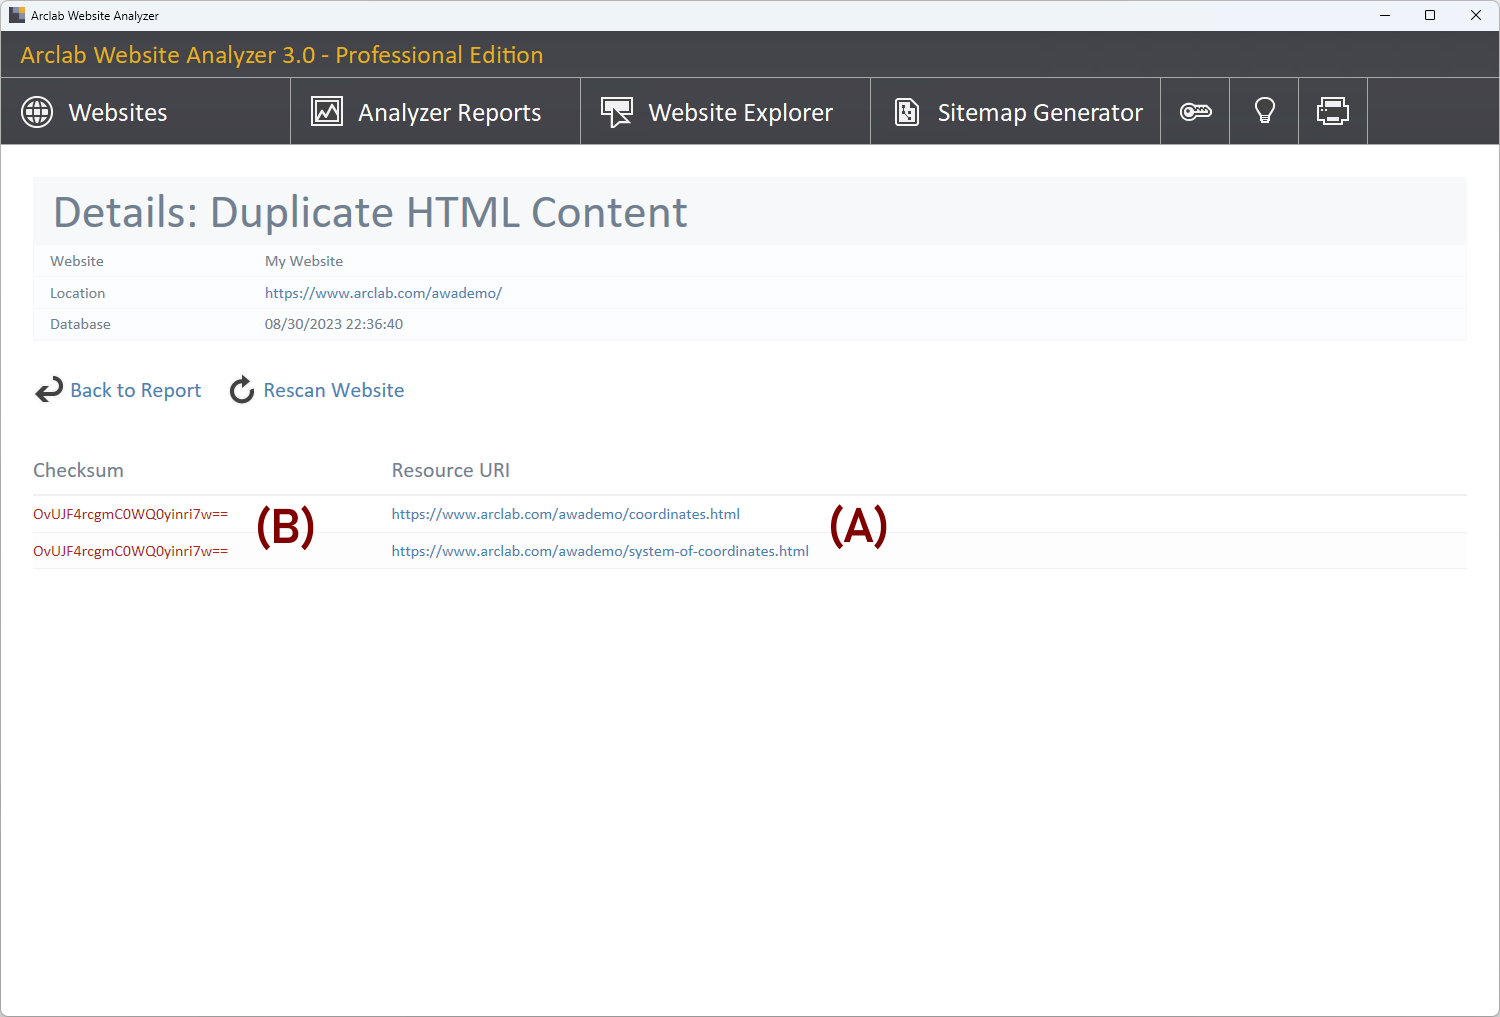 Details: Duplicate HTML Content